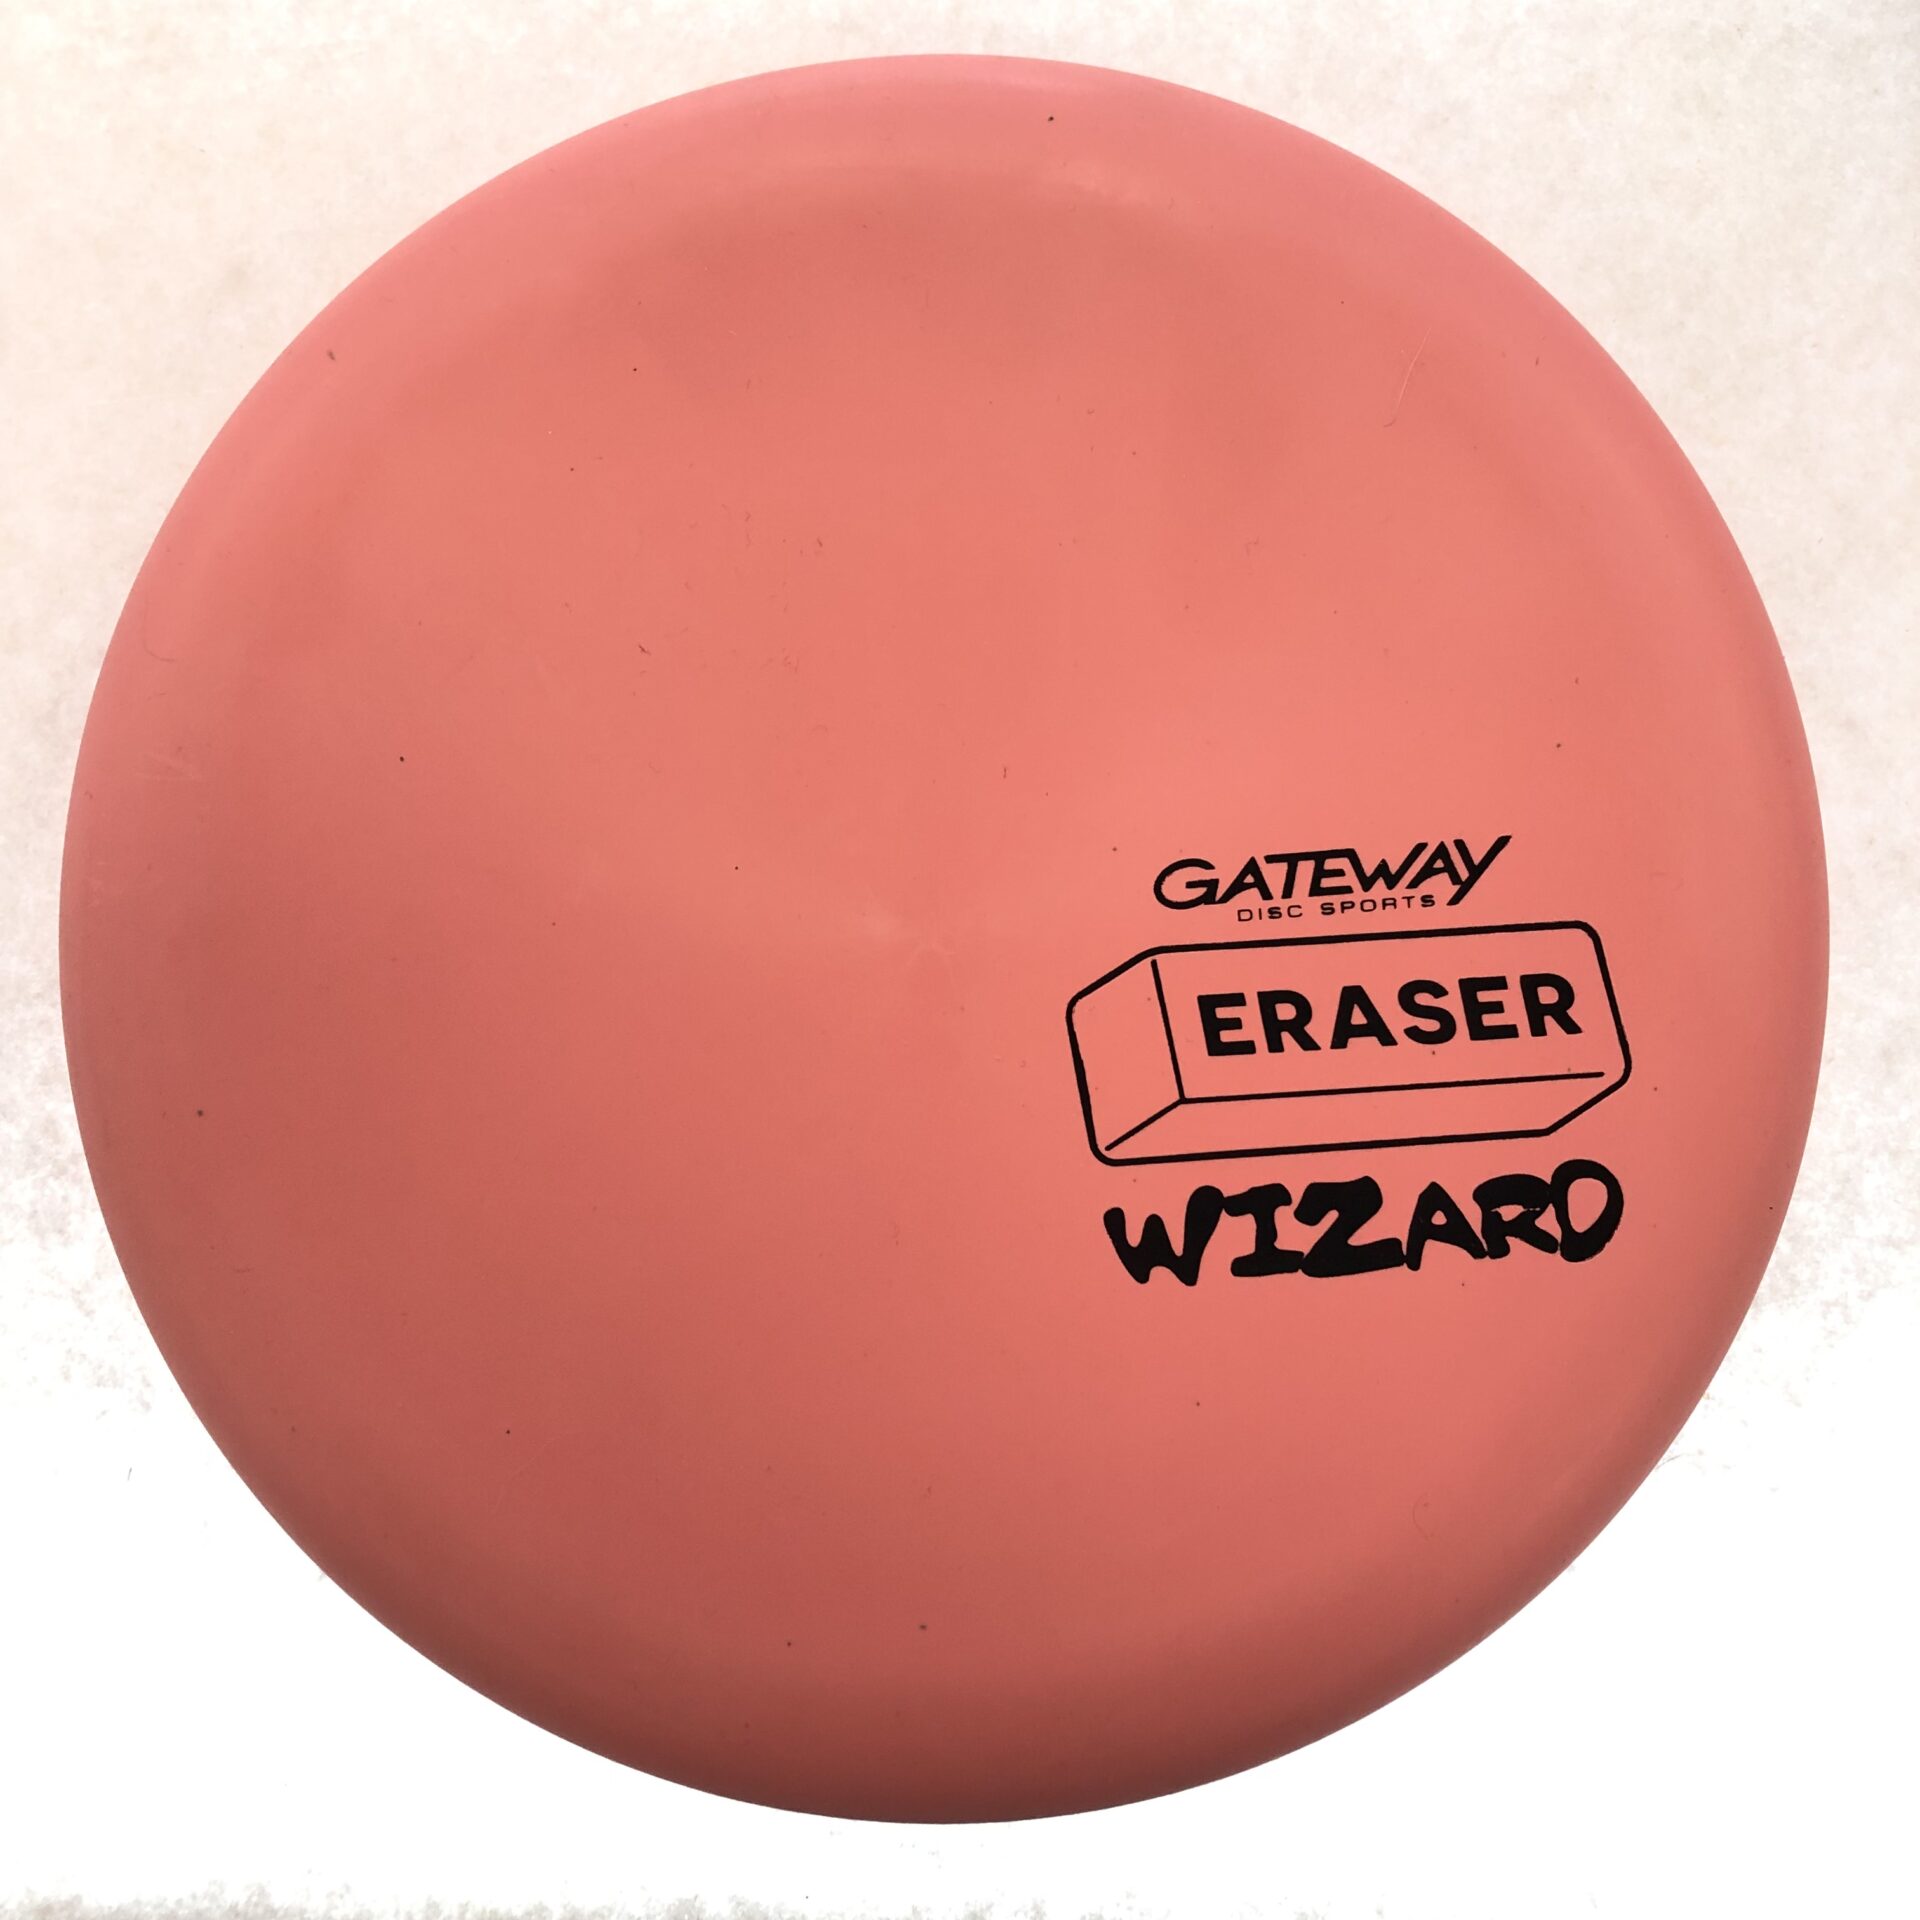 Gateway eraser wizard stable pink and black foil